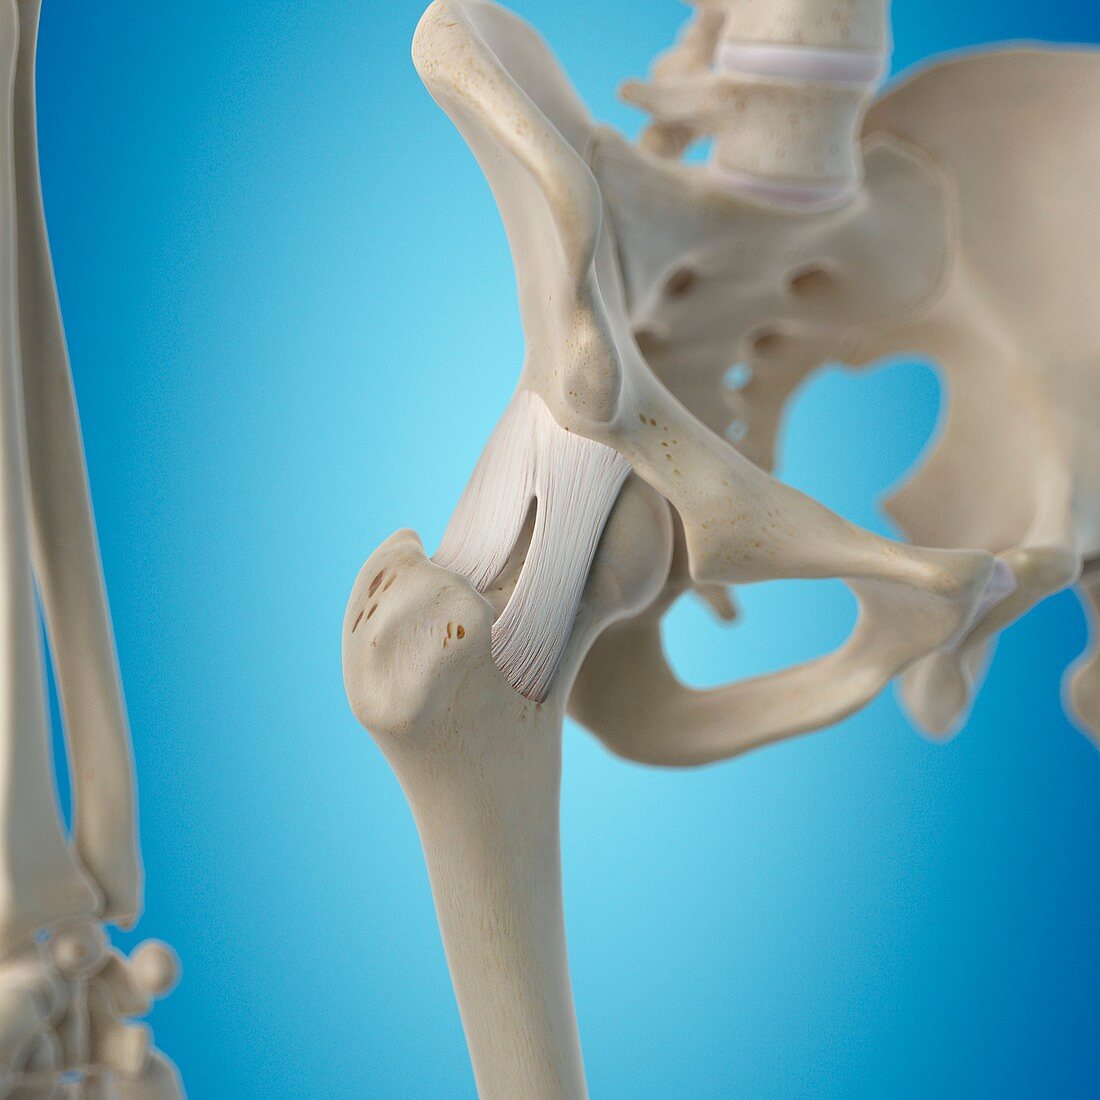 Human hip ligaments,artwork